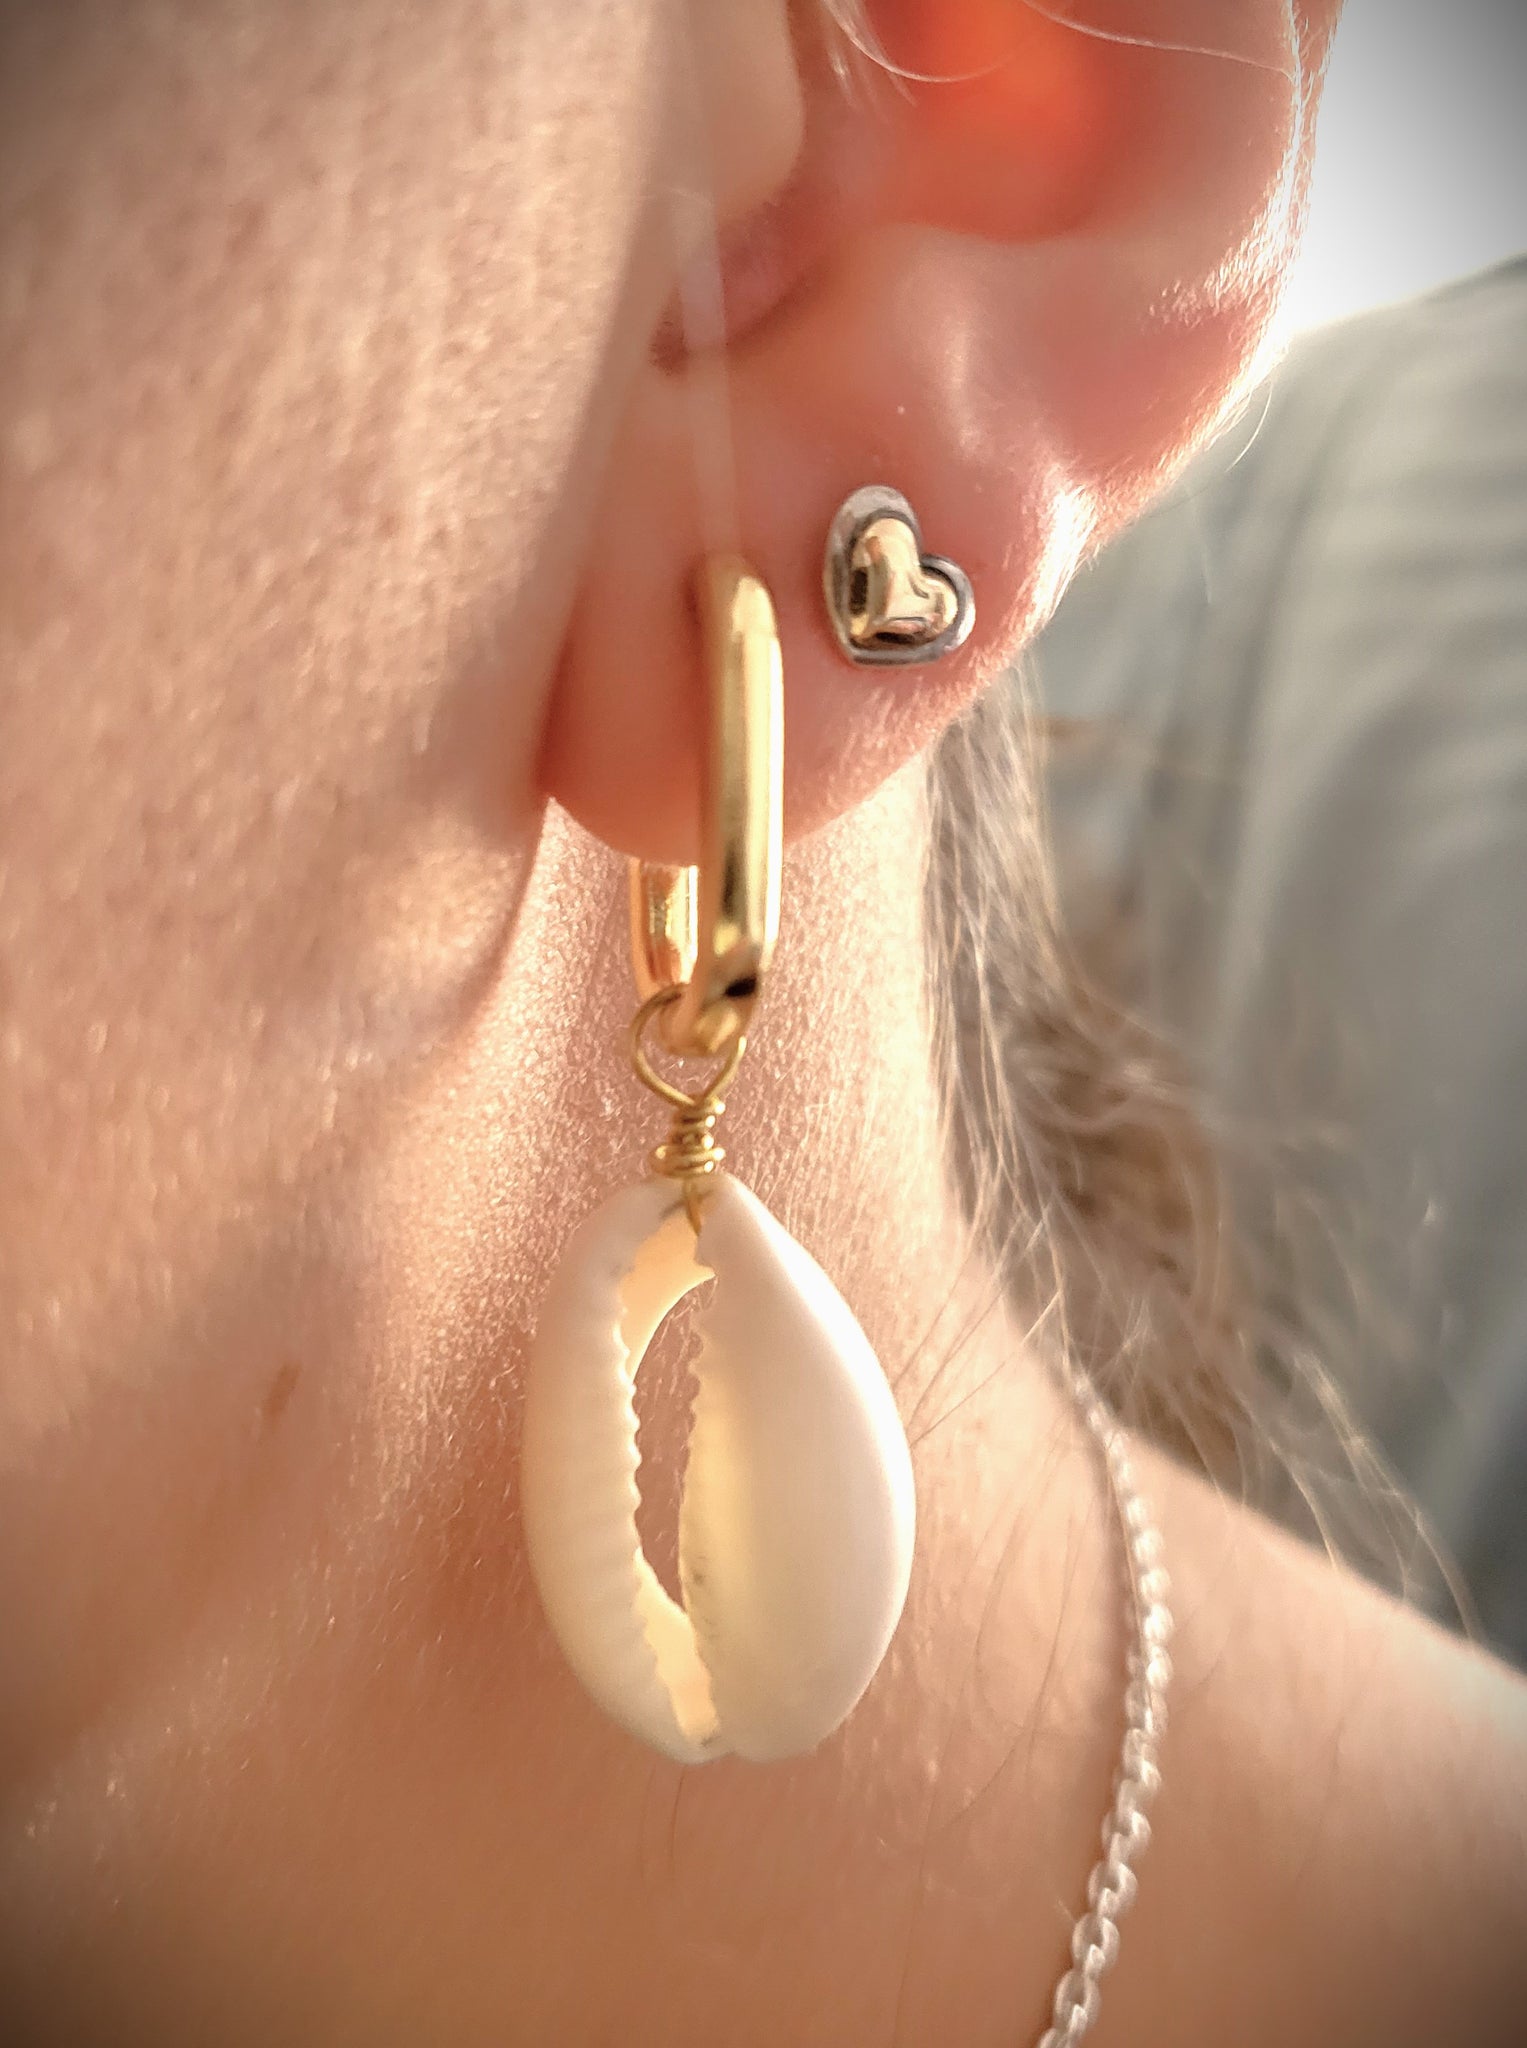 Earrings Sunchasers with seashell